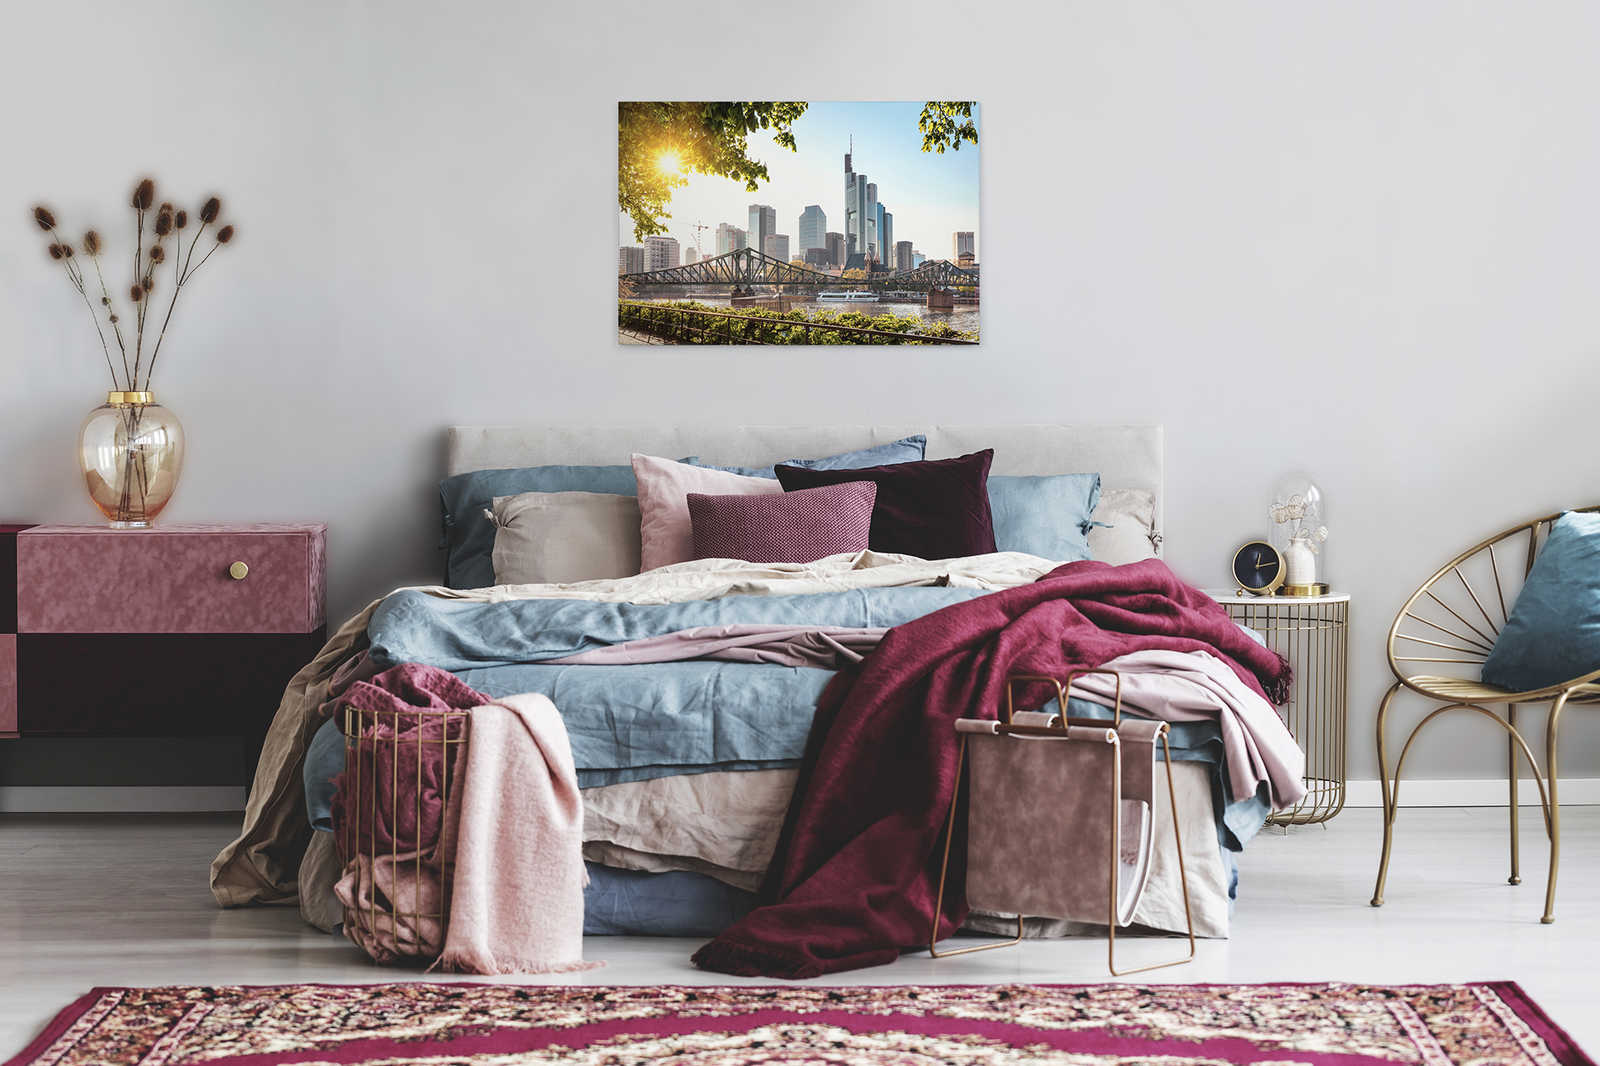             Canvas with Frankfurt Skyline - 0.90 m x 0.60 m
        